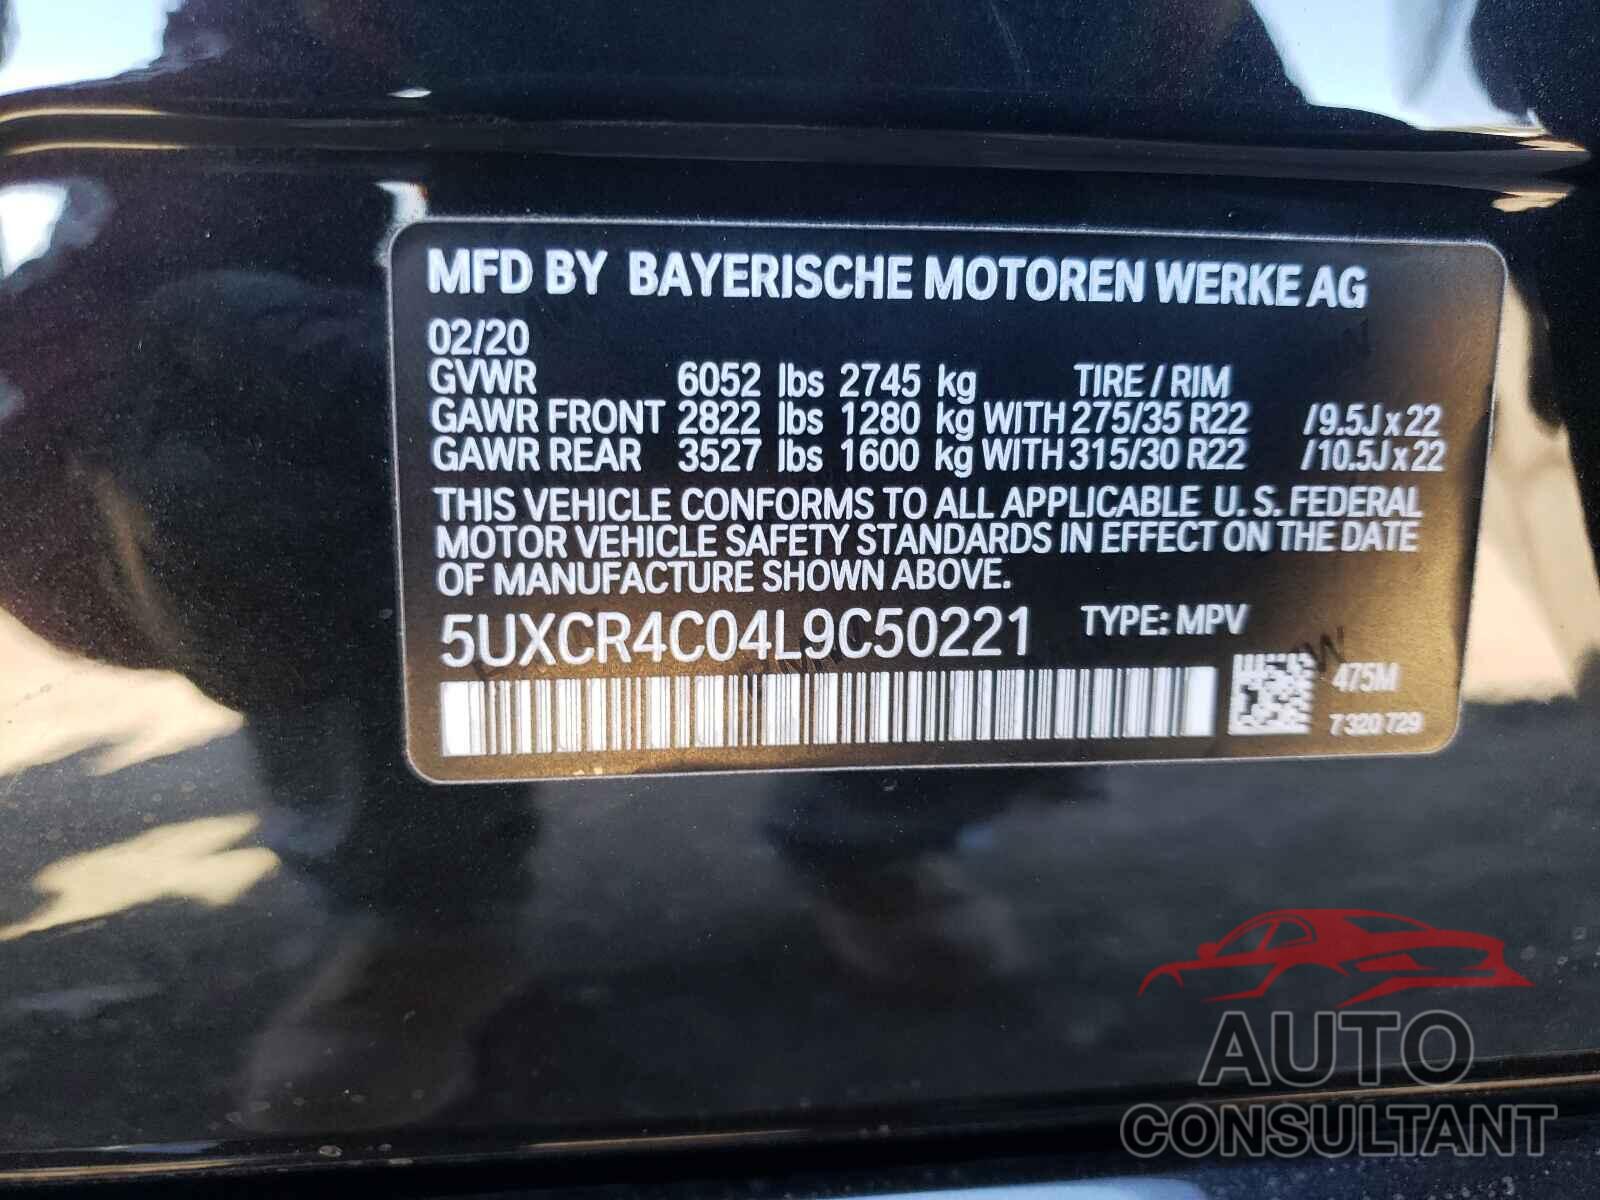 BMW X5 2020 - 5UXCR4C04L9C50221